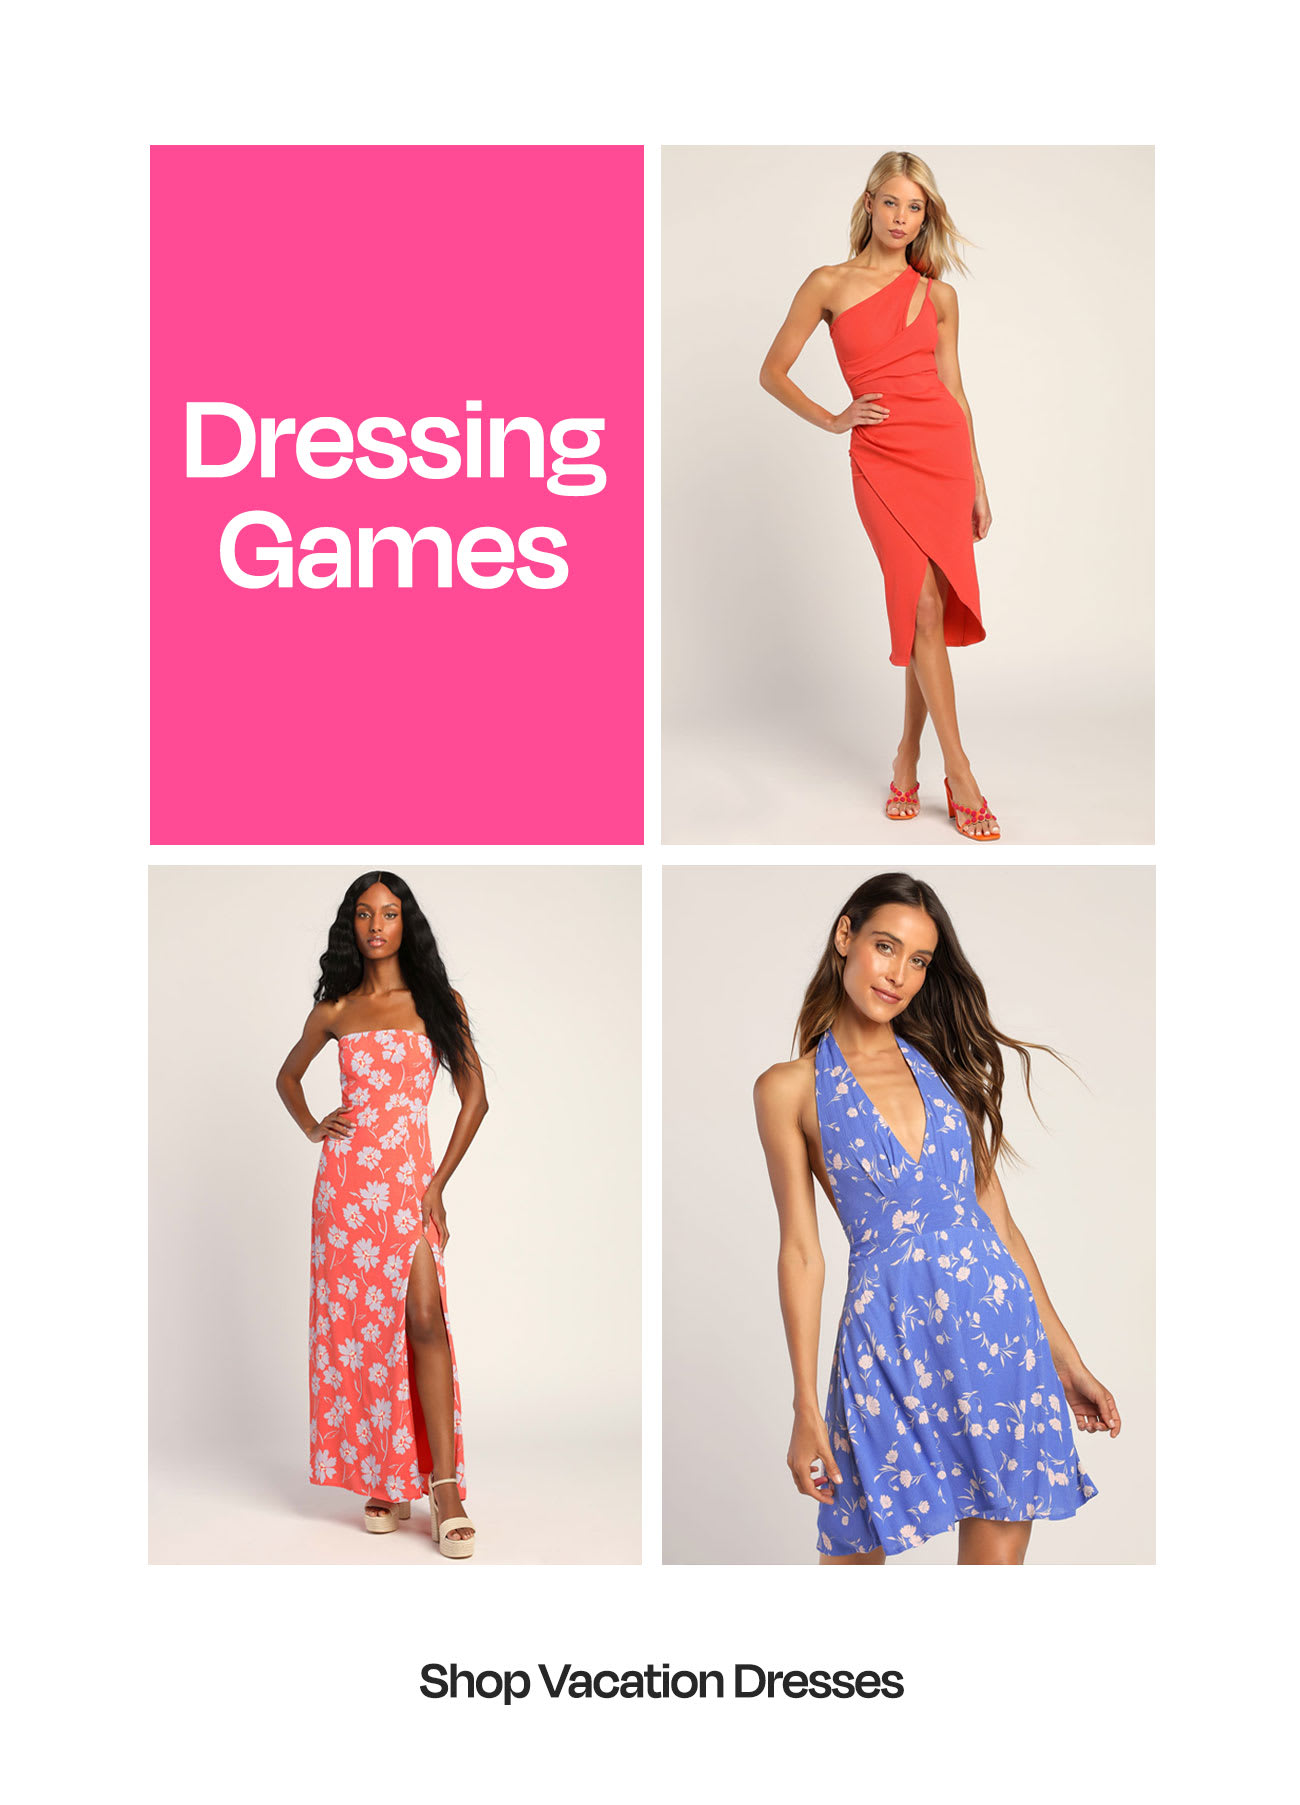 Dressing Games Shop Vacation Dresses 